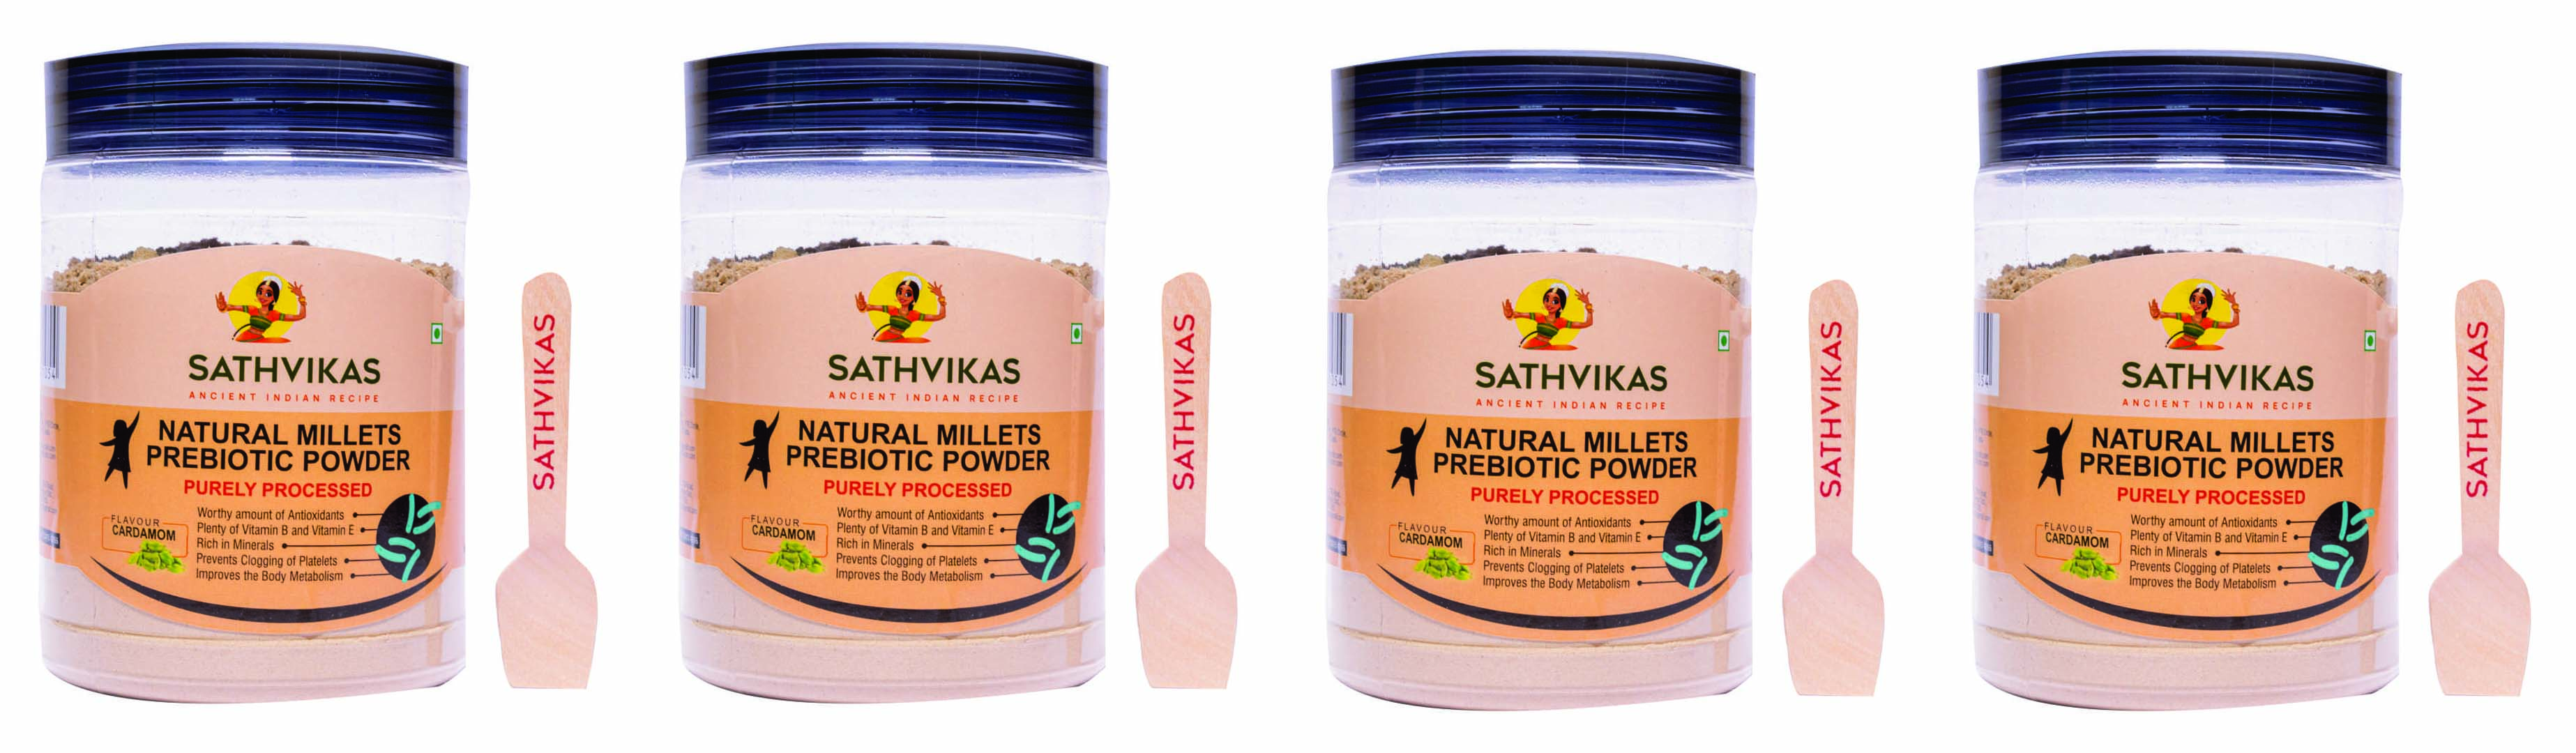 Sathvikas Natural Millets Prebiotic Powder (Cardamom Flavour) 500 Grams Pack Of 4.